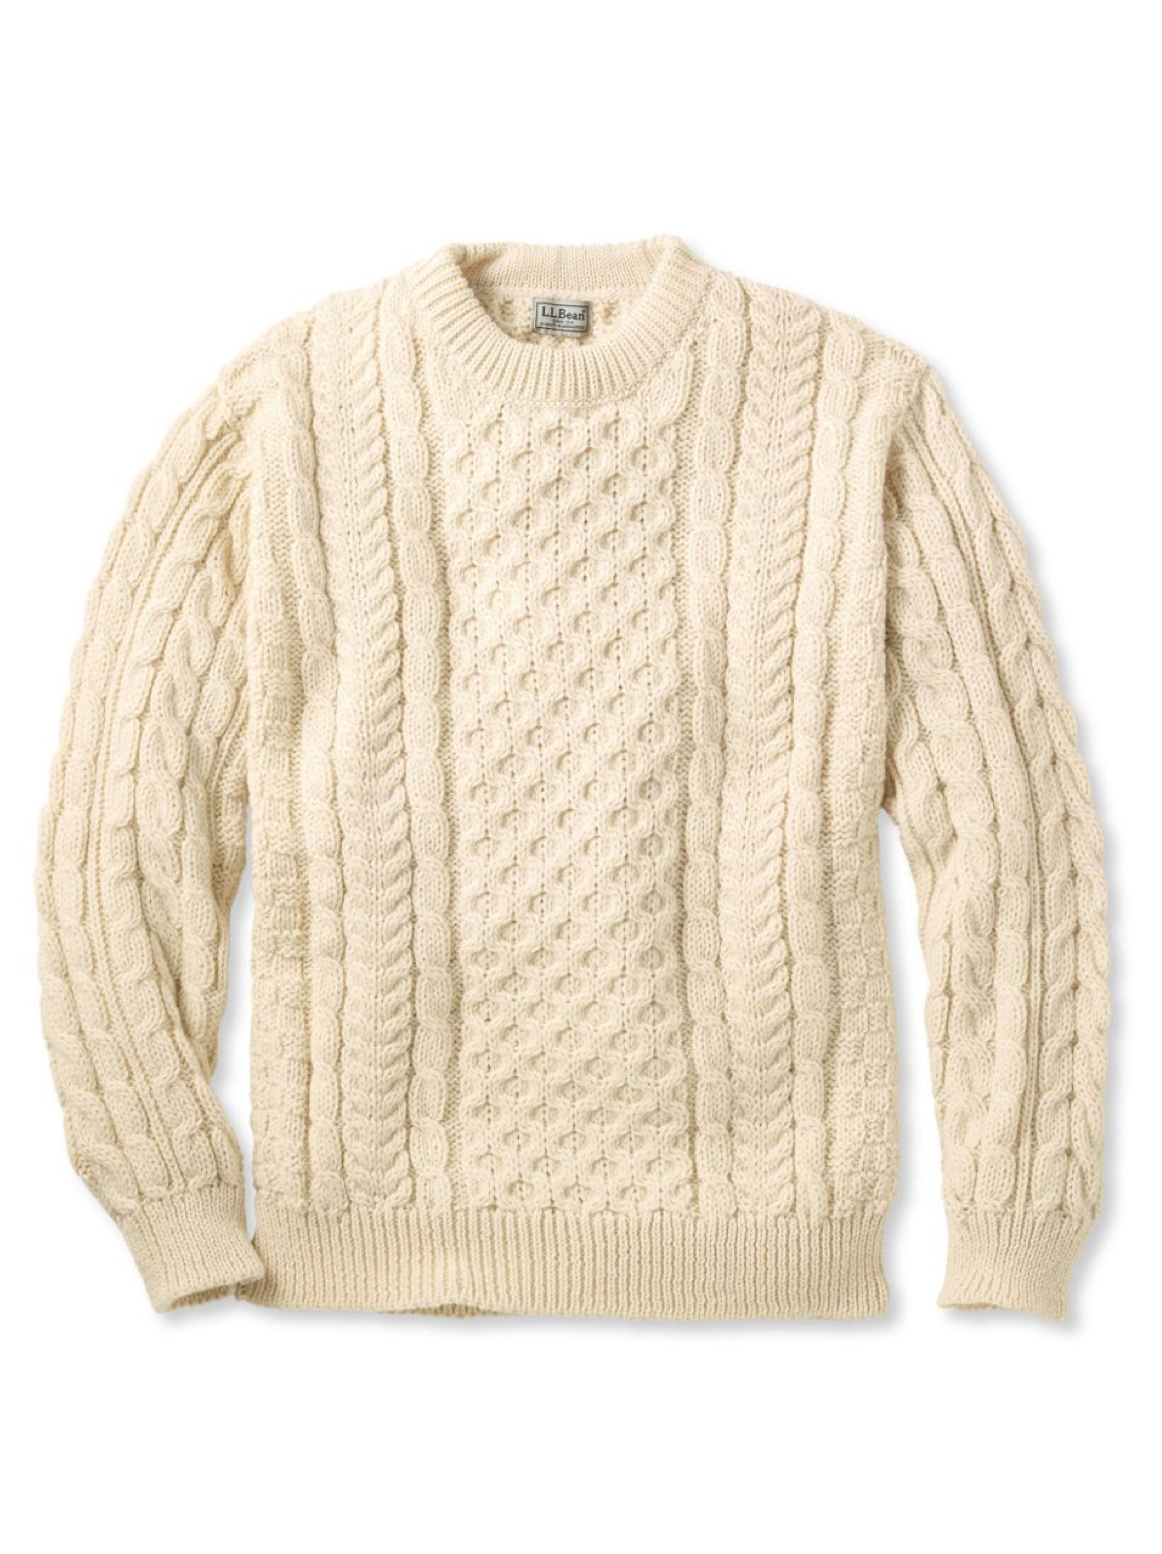 Ivory Heritage Sweater